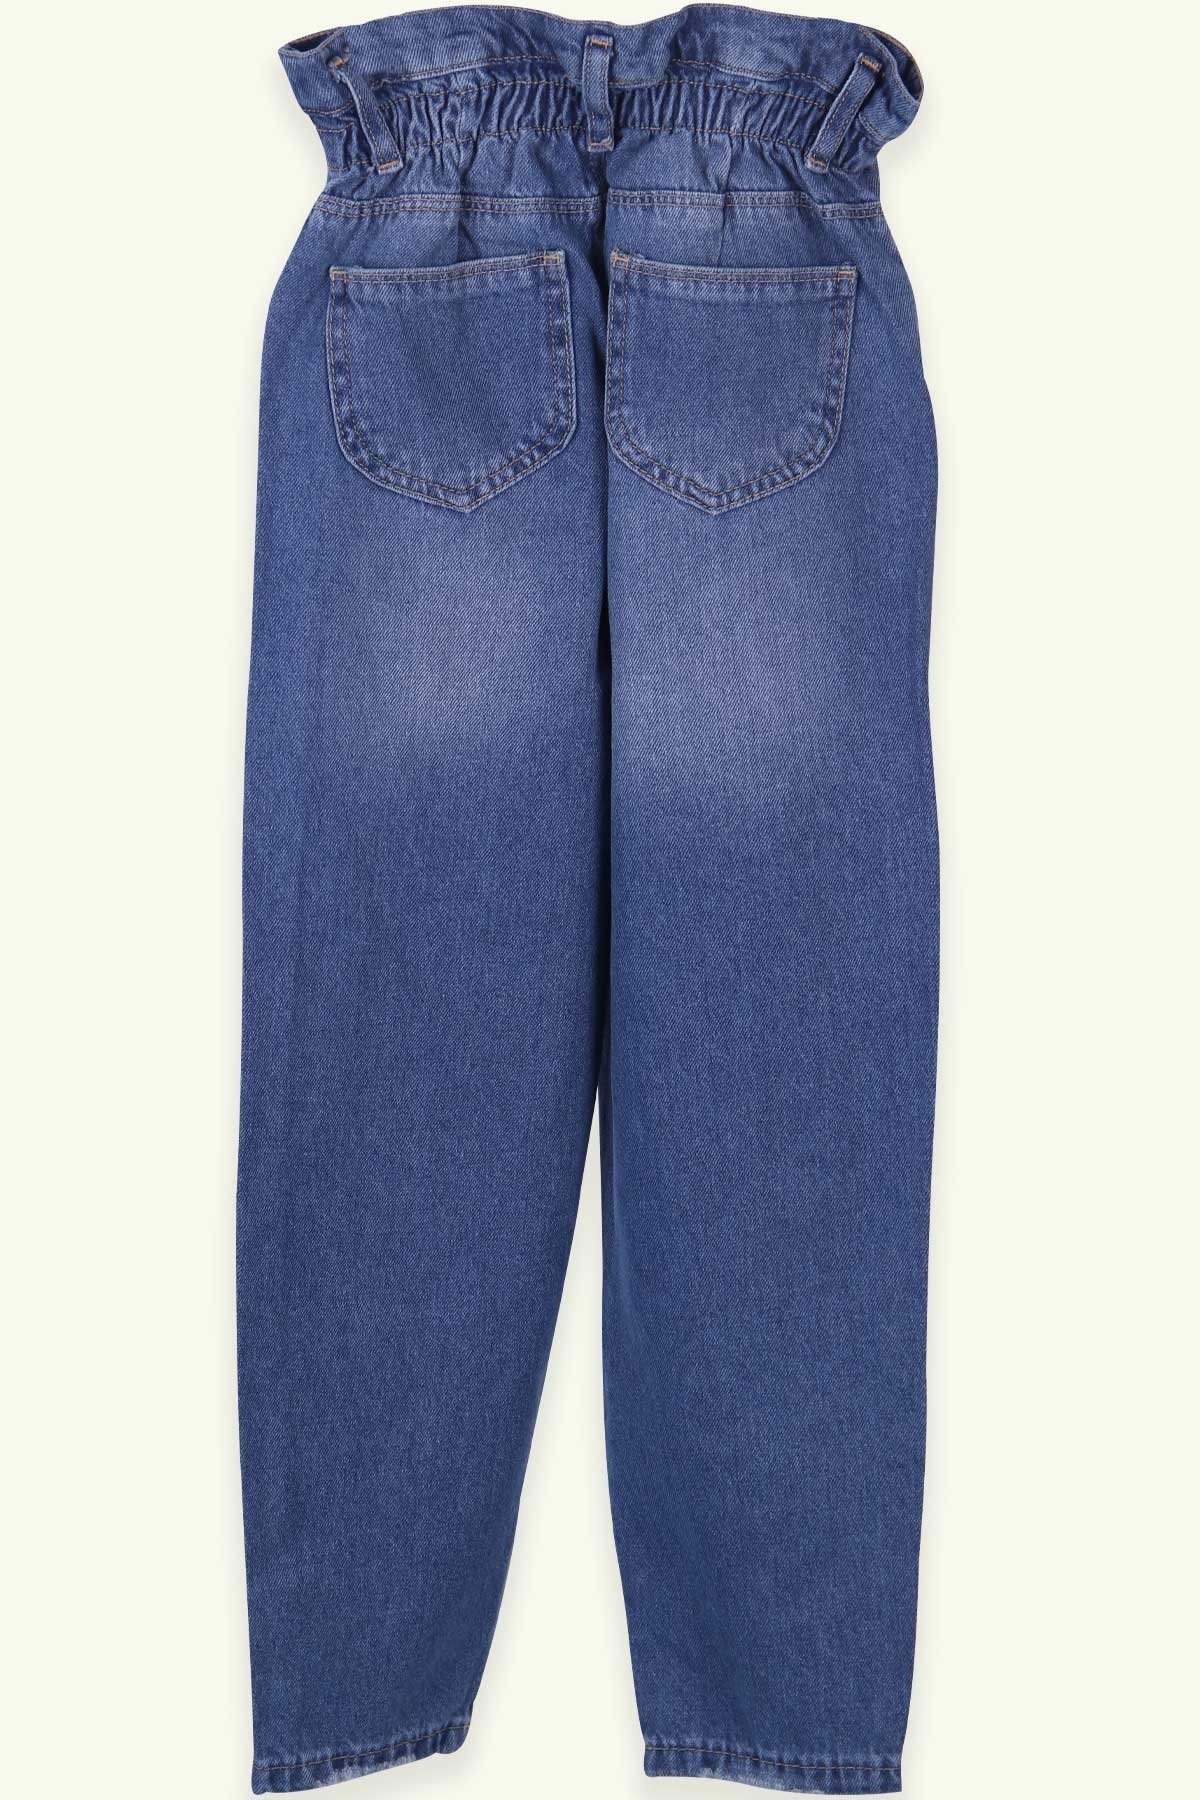 Kız Çocuk Kot Pantolon Beli Lastikli Mavi 11 Yaş - Breeze